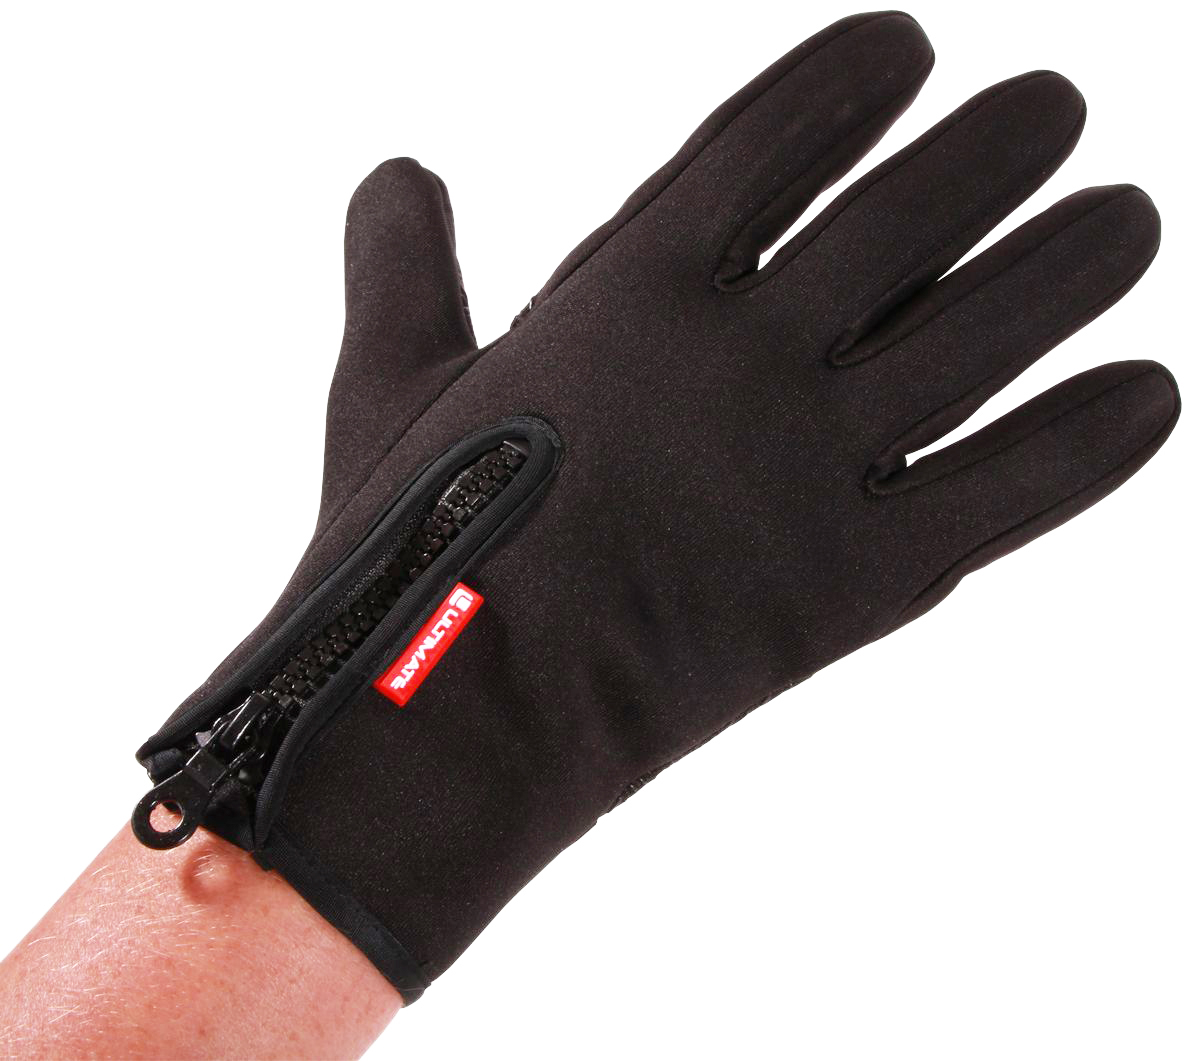 Ultimate Shield Gloves